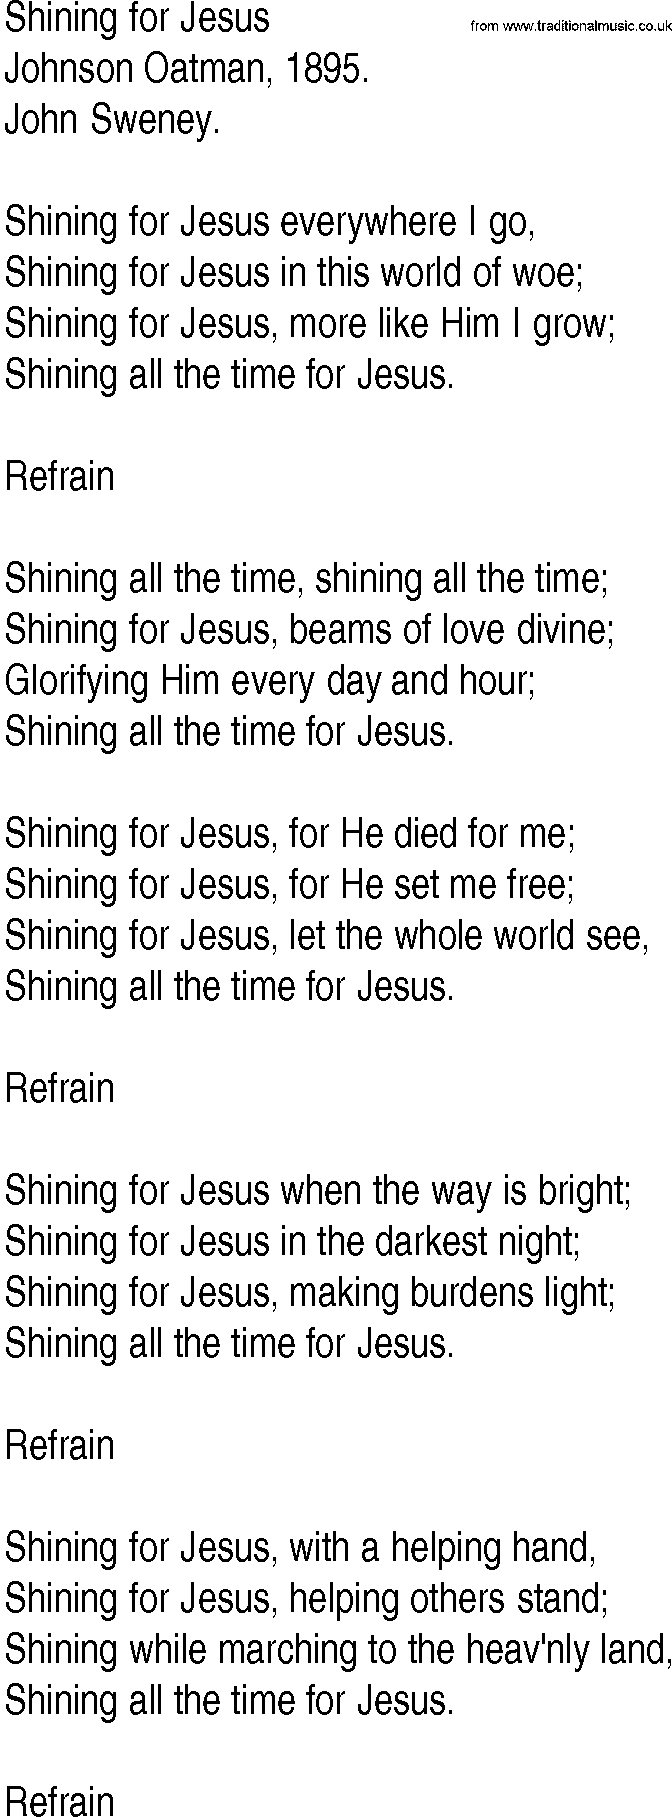 Hymn and Gospel Song: Shining for Jesus by Johnson Oatman lyrics